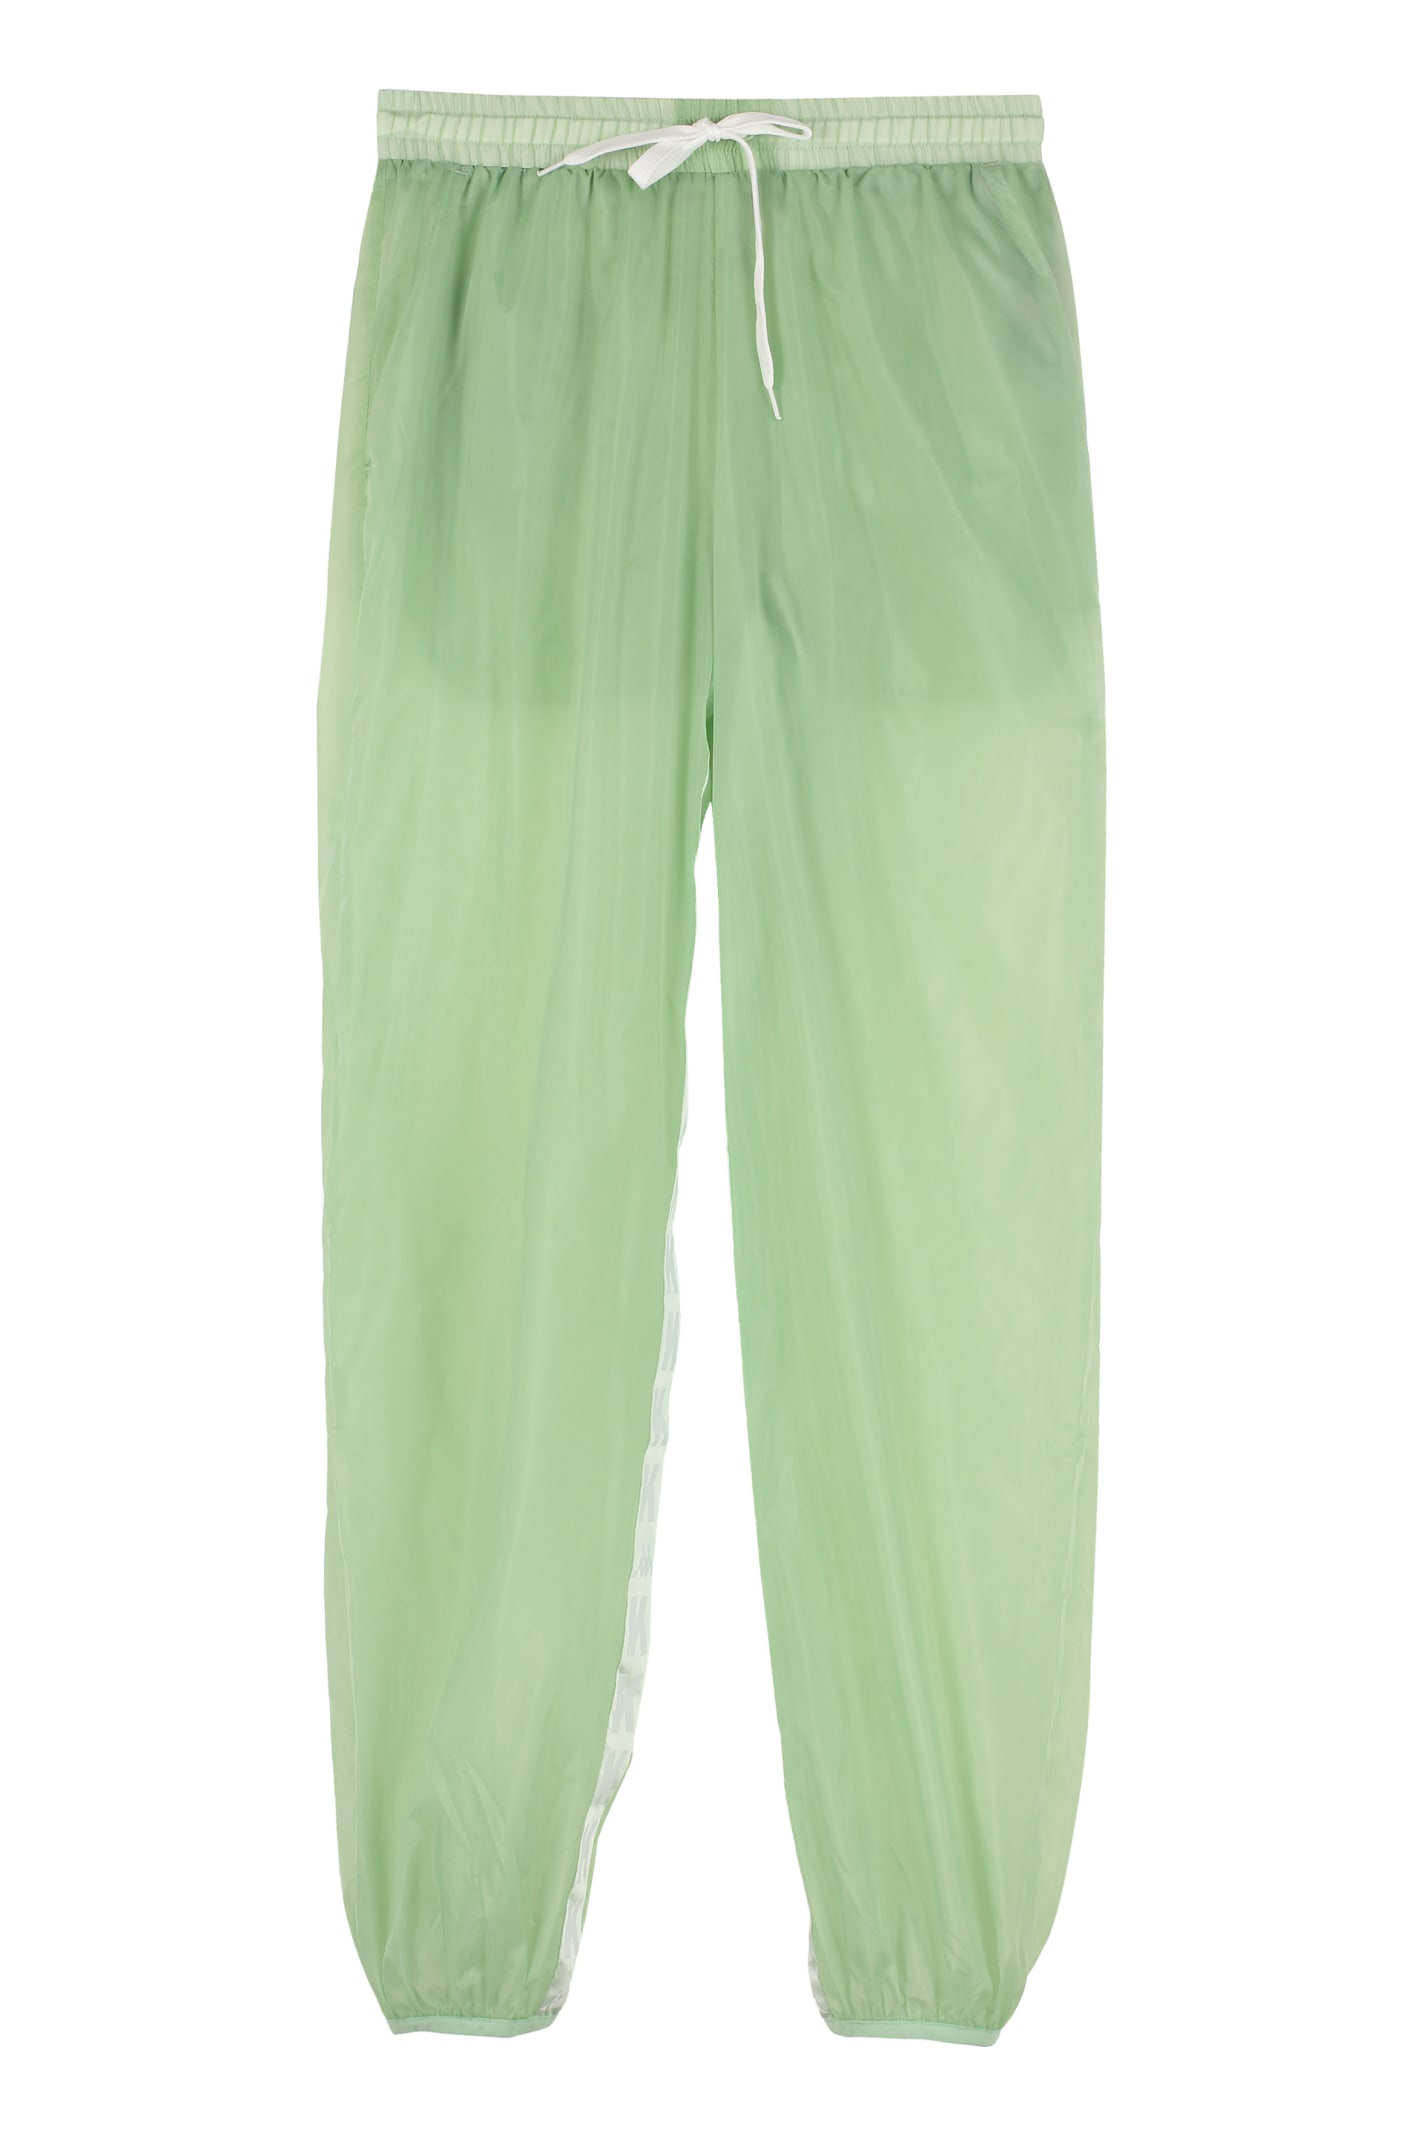 kappa track pants green